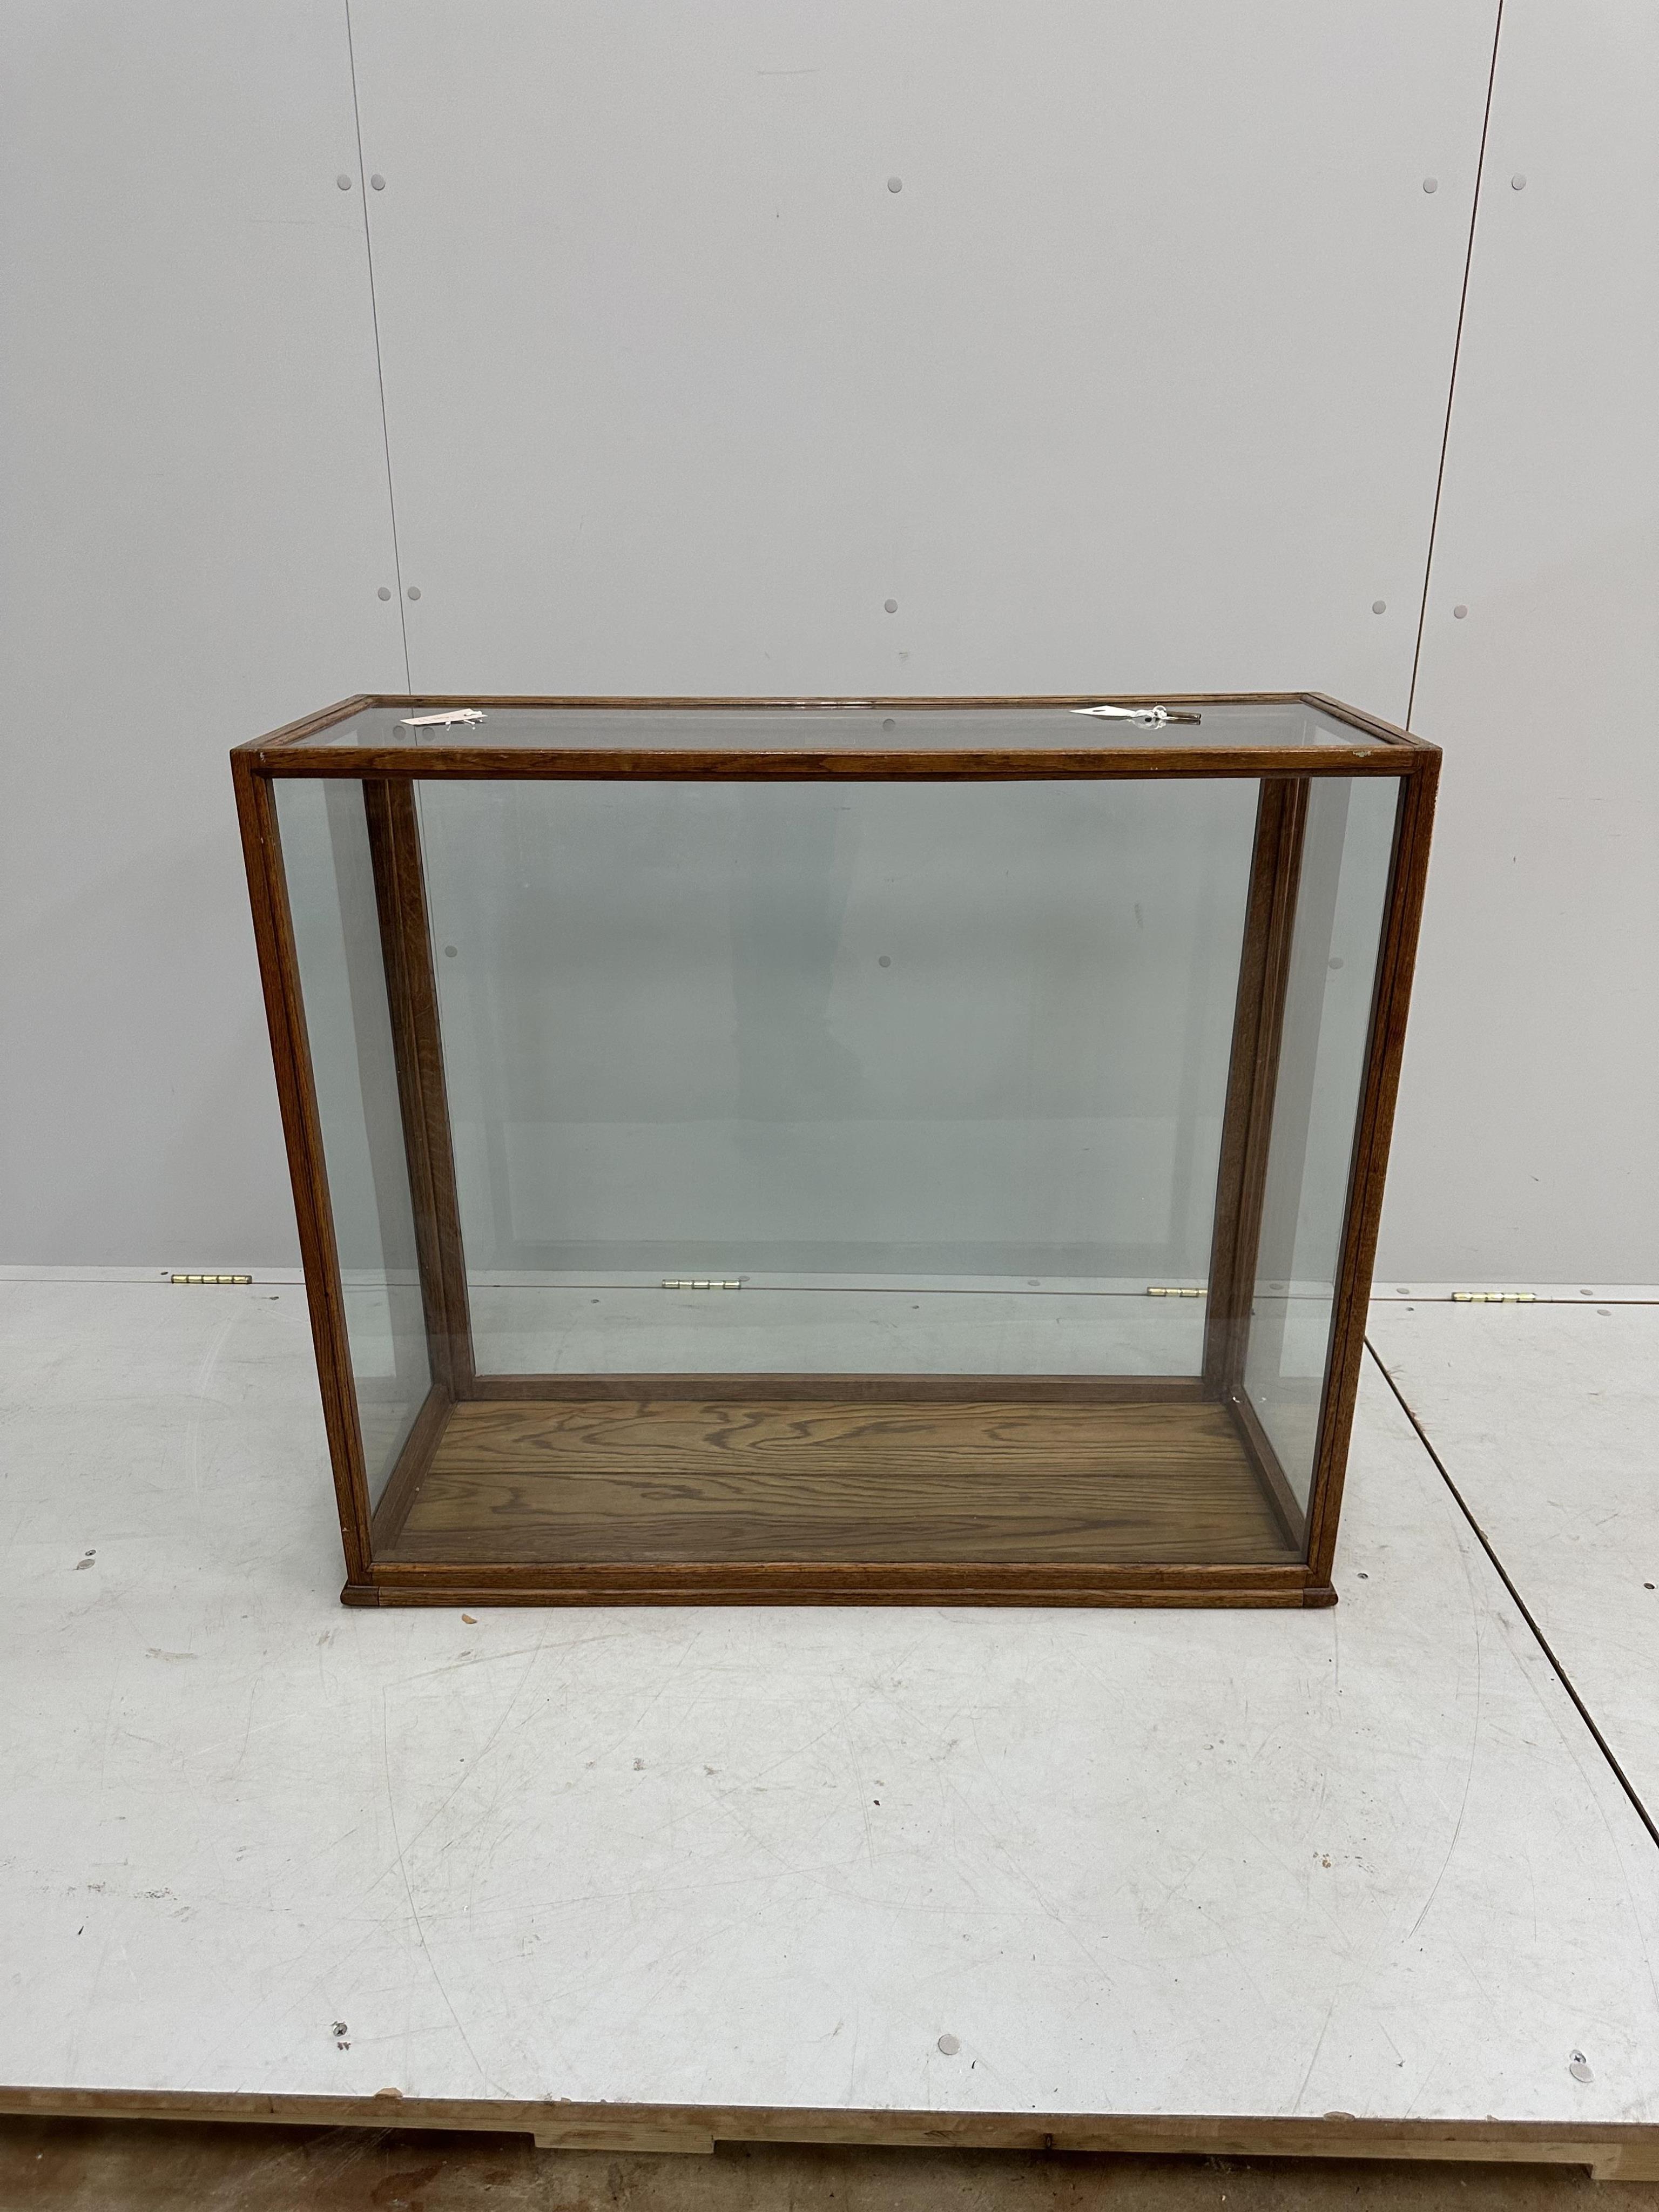 An early 20th century glazed oak display case, width 96cm, depth 35cm, height 83cm. Condition - fair